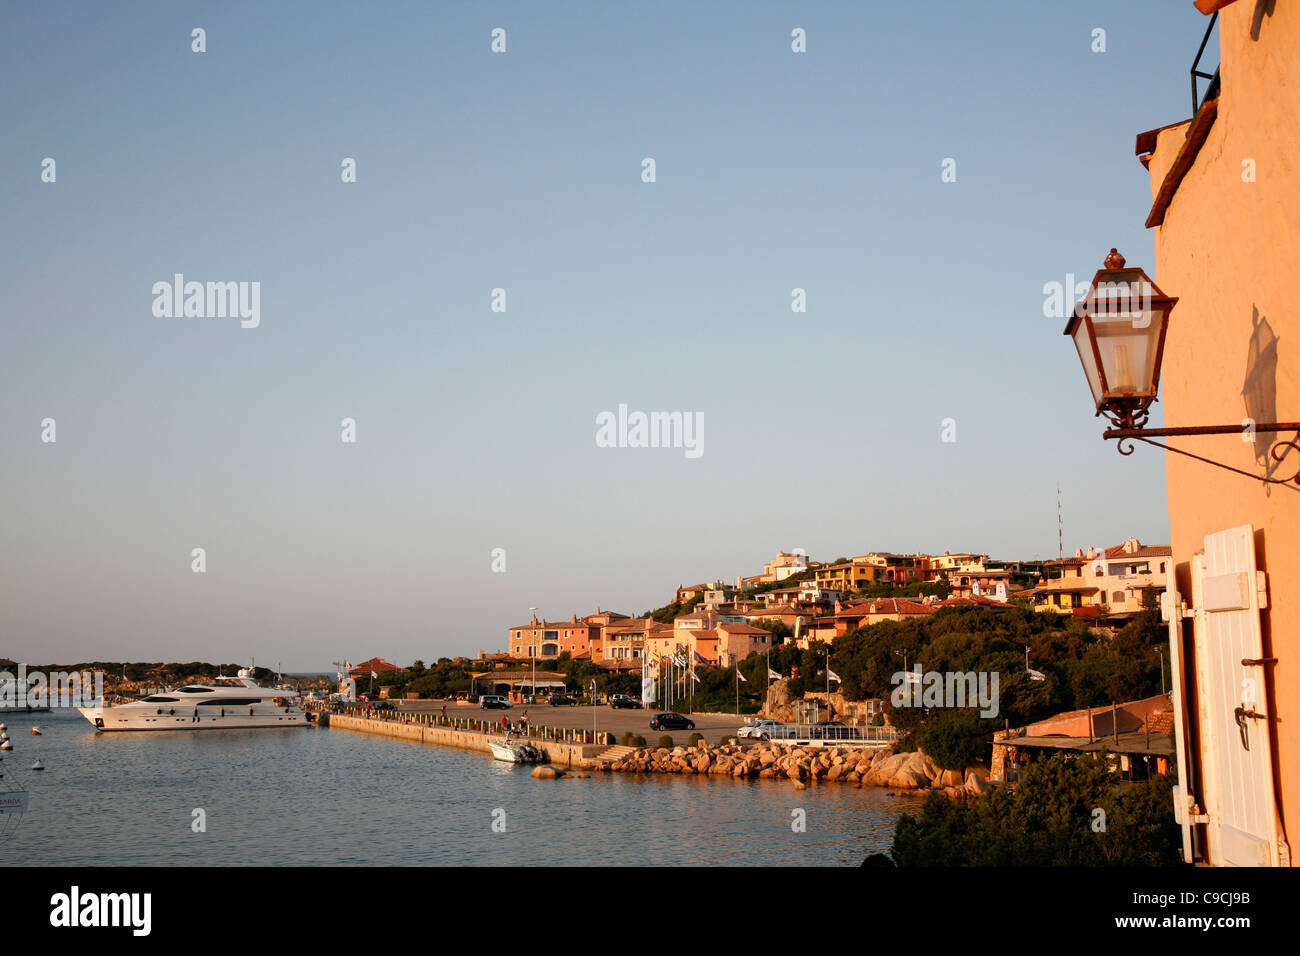 Porto Cervo, Costa Smeralda, Sardinia, Italy. Stock Photo